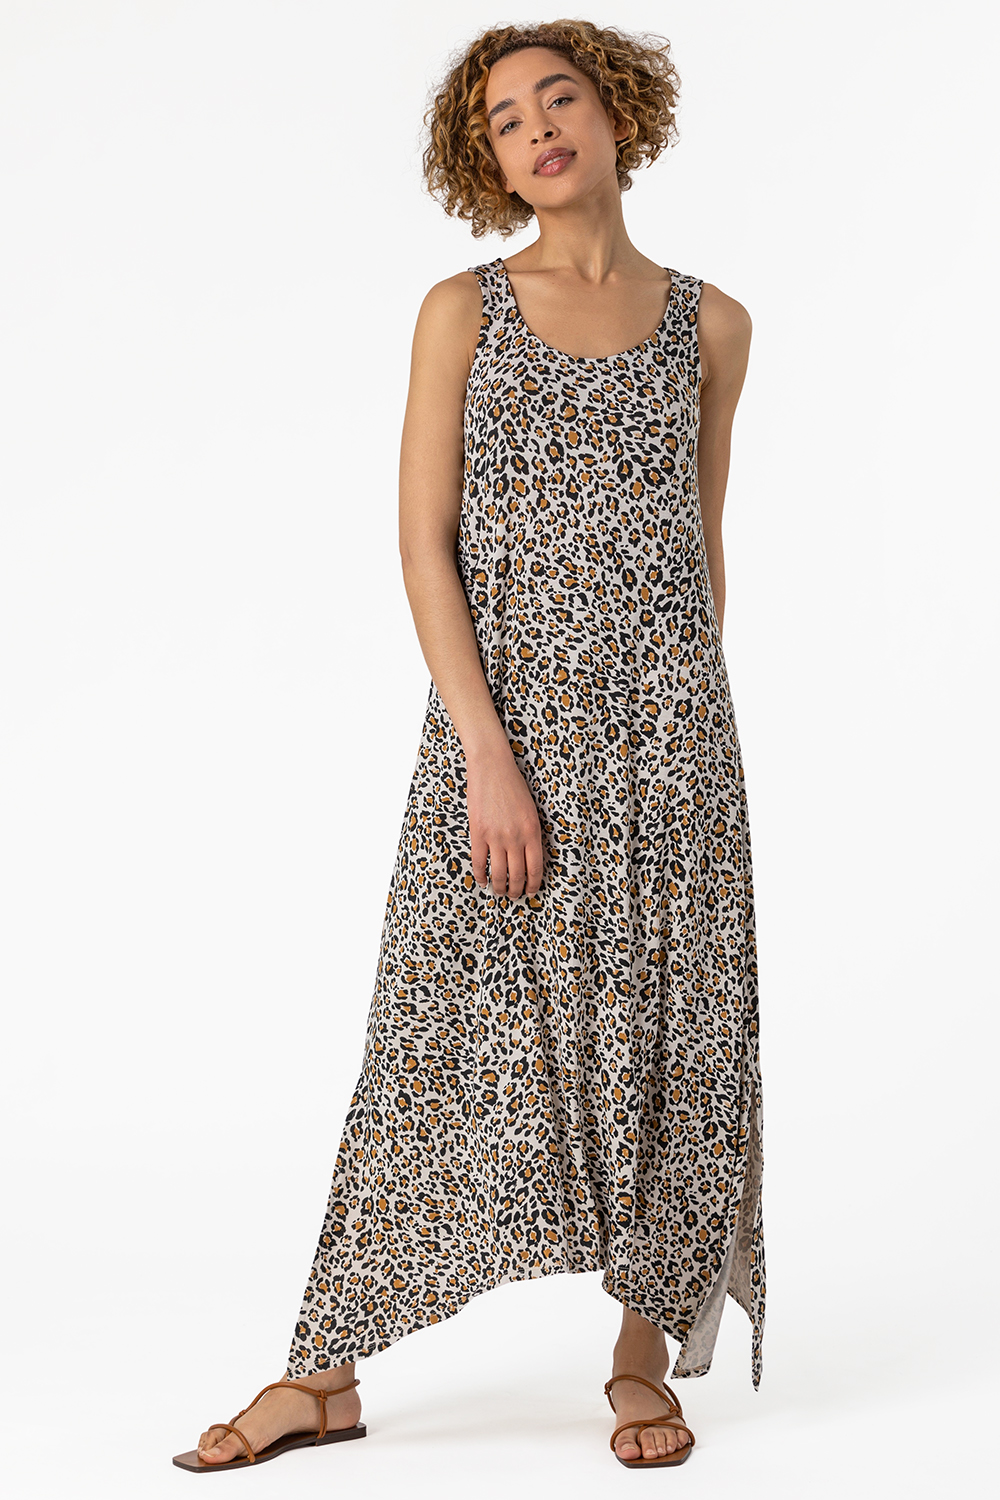 Cheetah Print Hanky Hem Stretch Dress